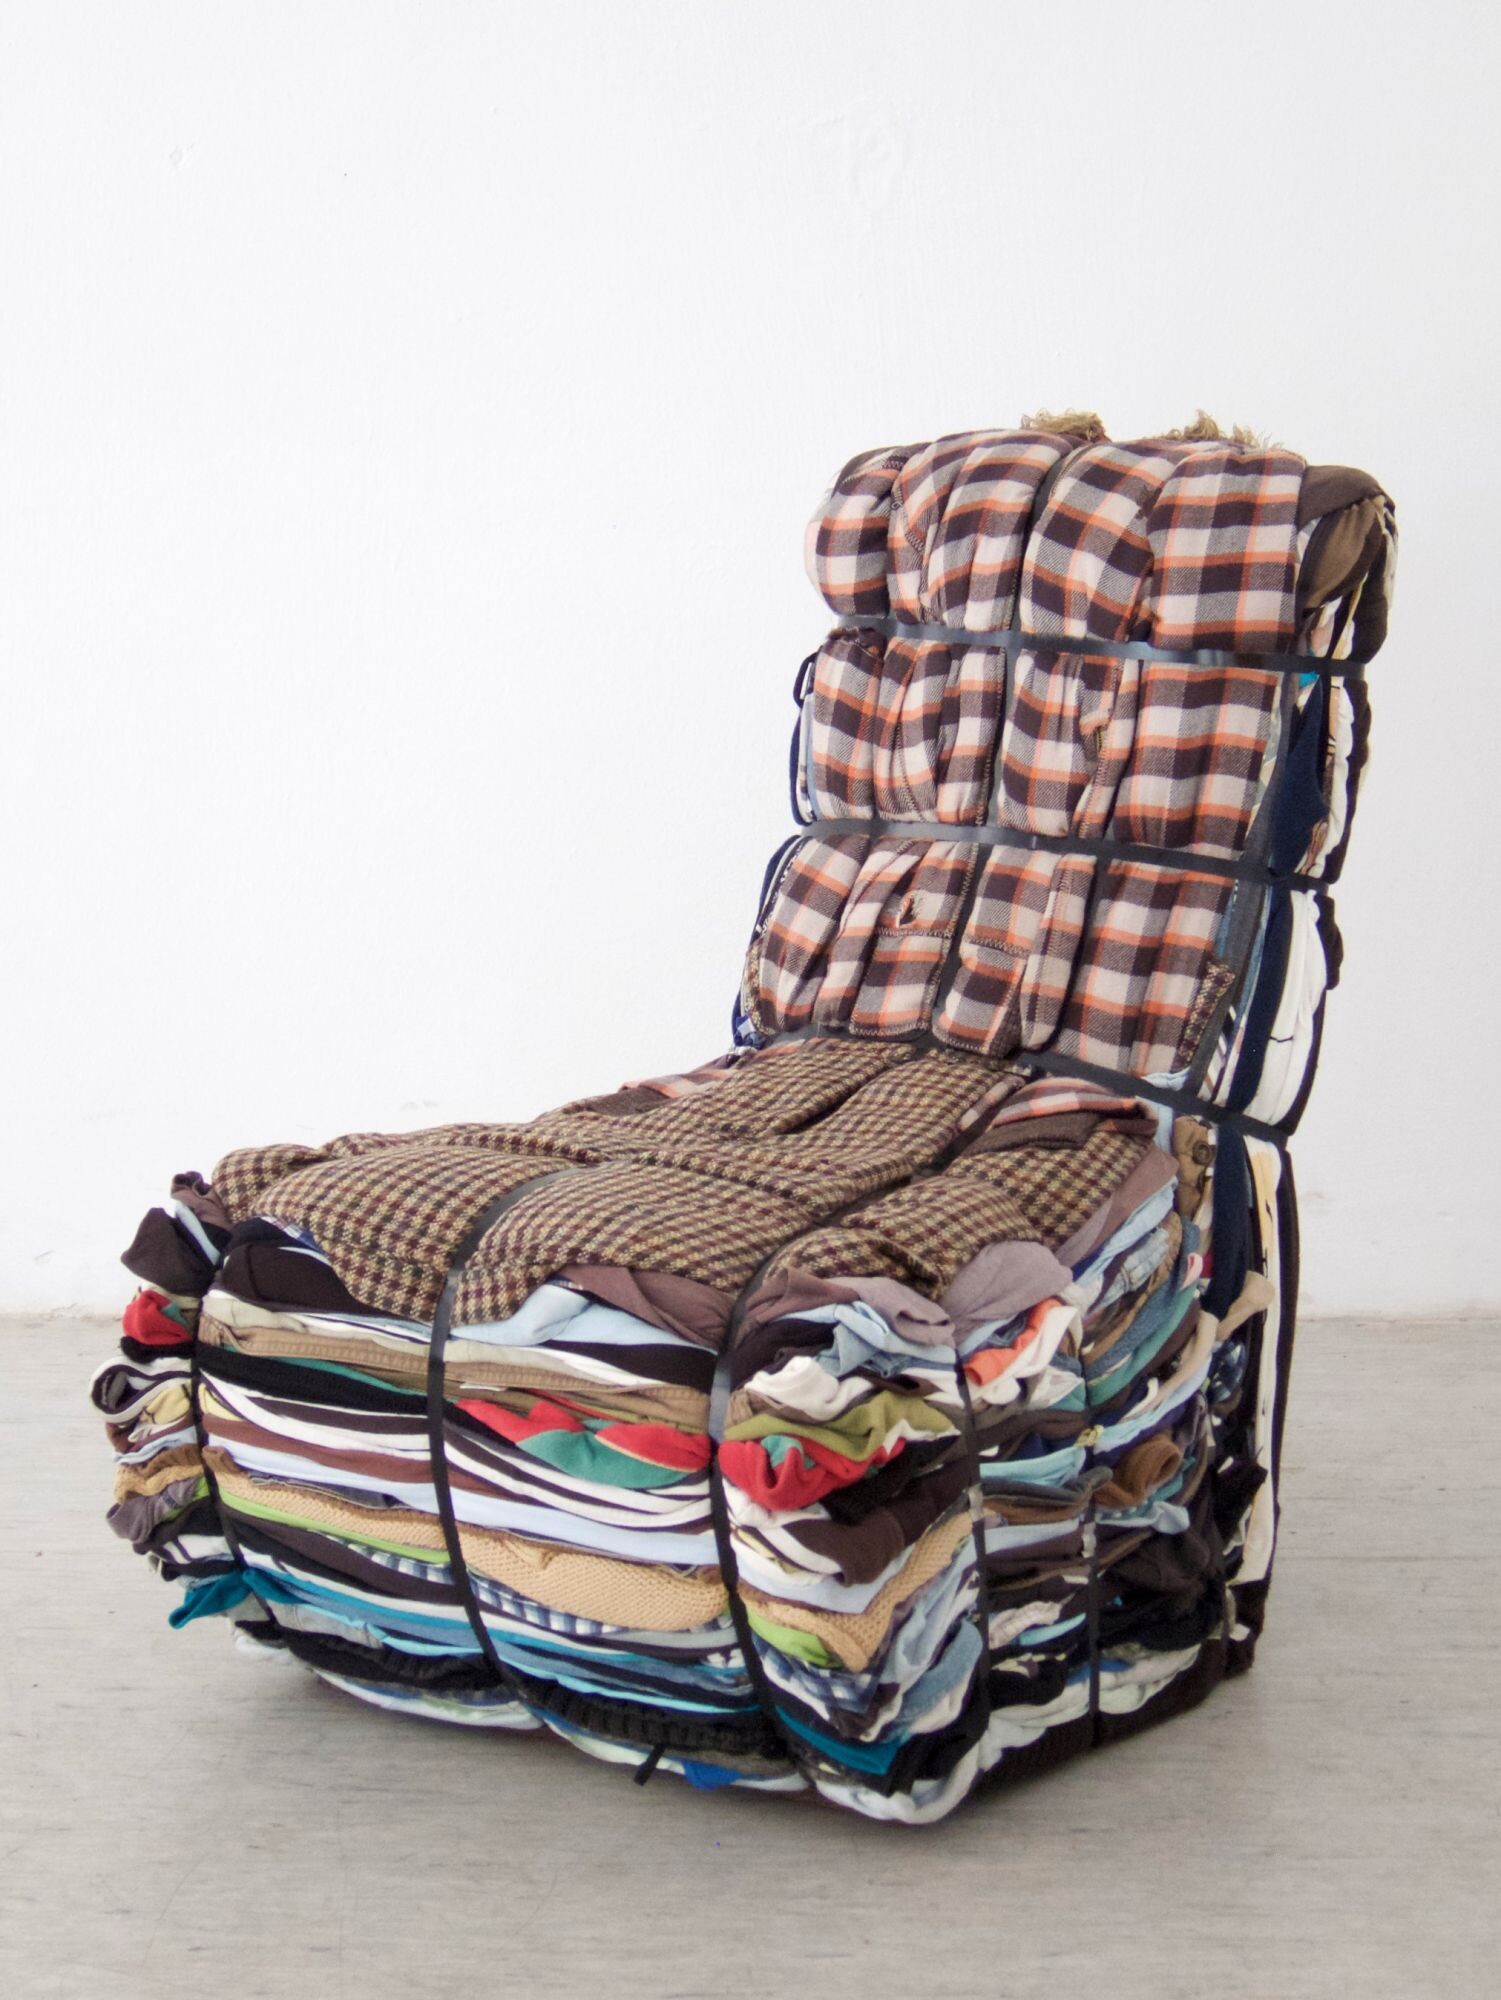 Tejo Remy, 1991, "Rag Chair", https://artorigo.com/furniture/rag-chair-by-tejo-remy/id-28901